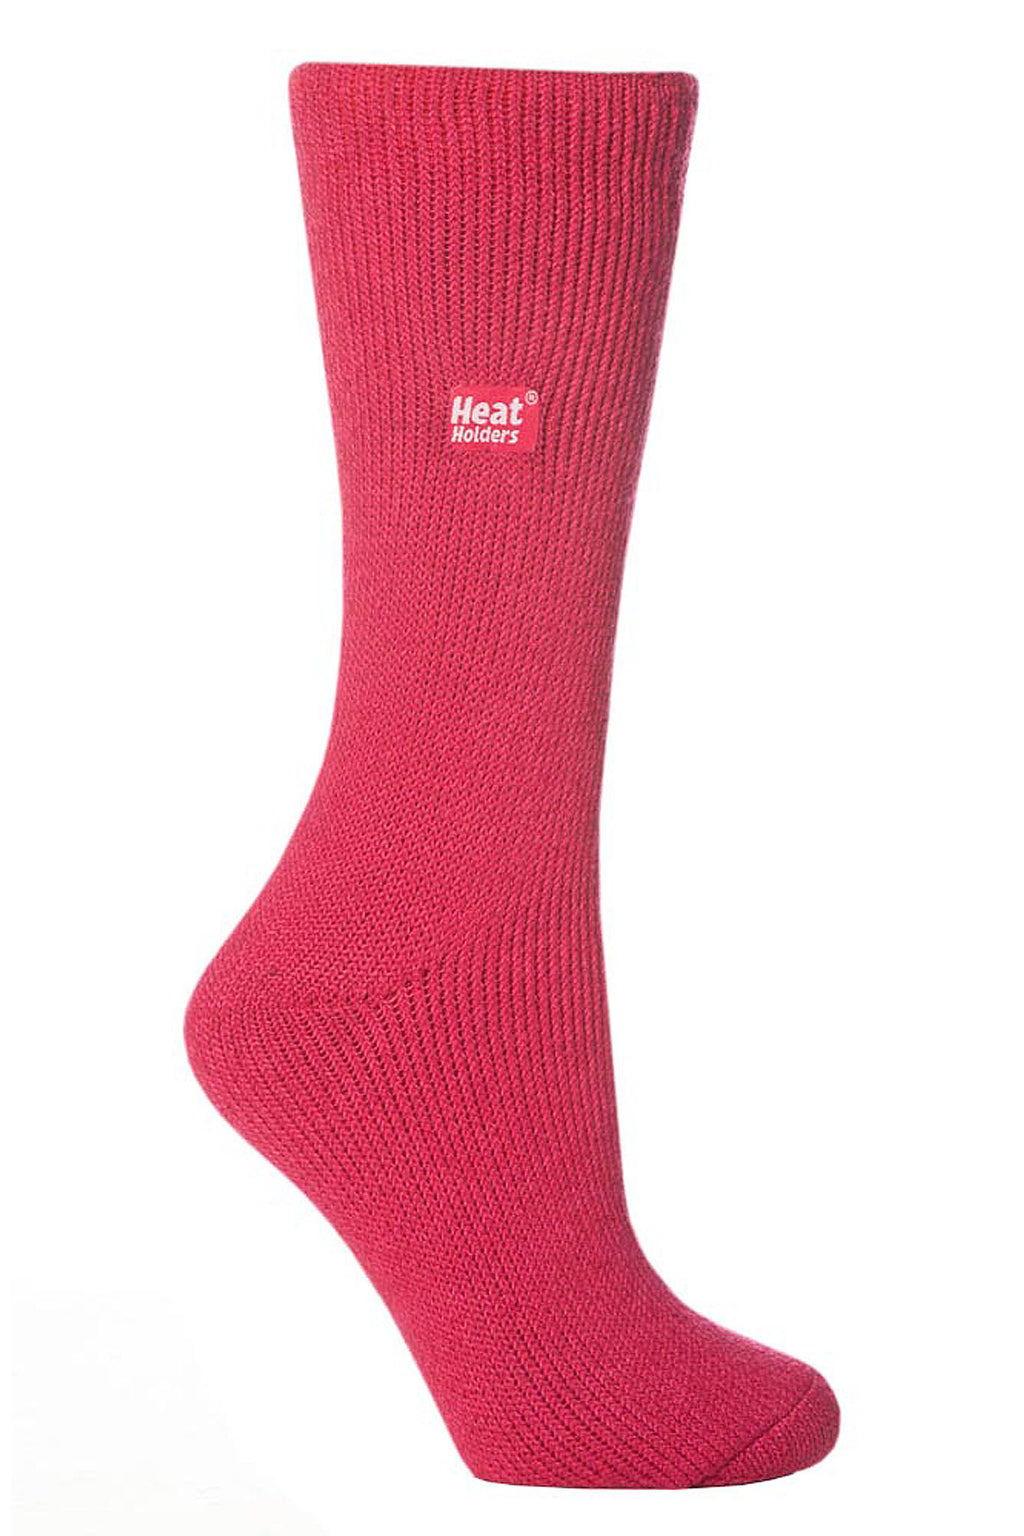 Women's Original Ultimate Thermal Socks, One size 5-9 us (Appleby 1847)